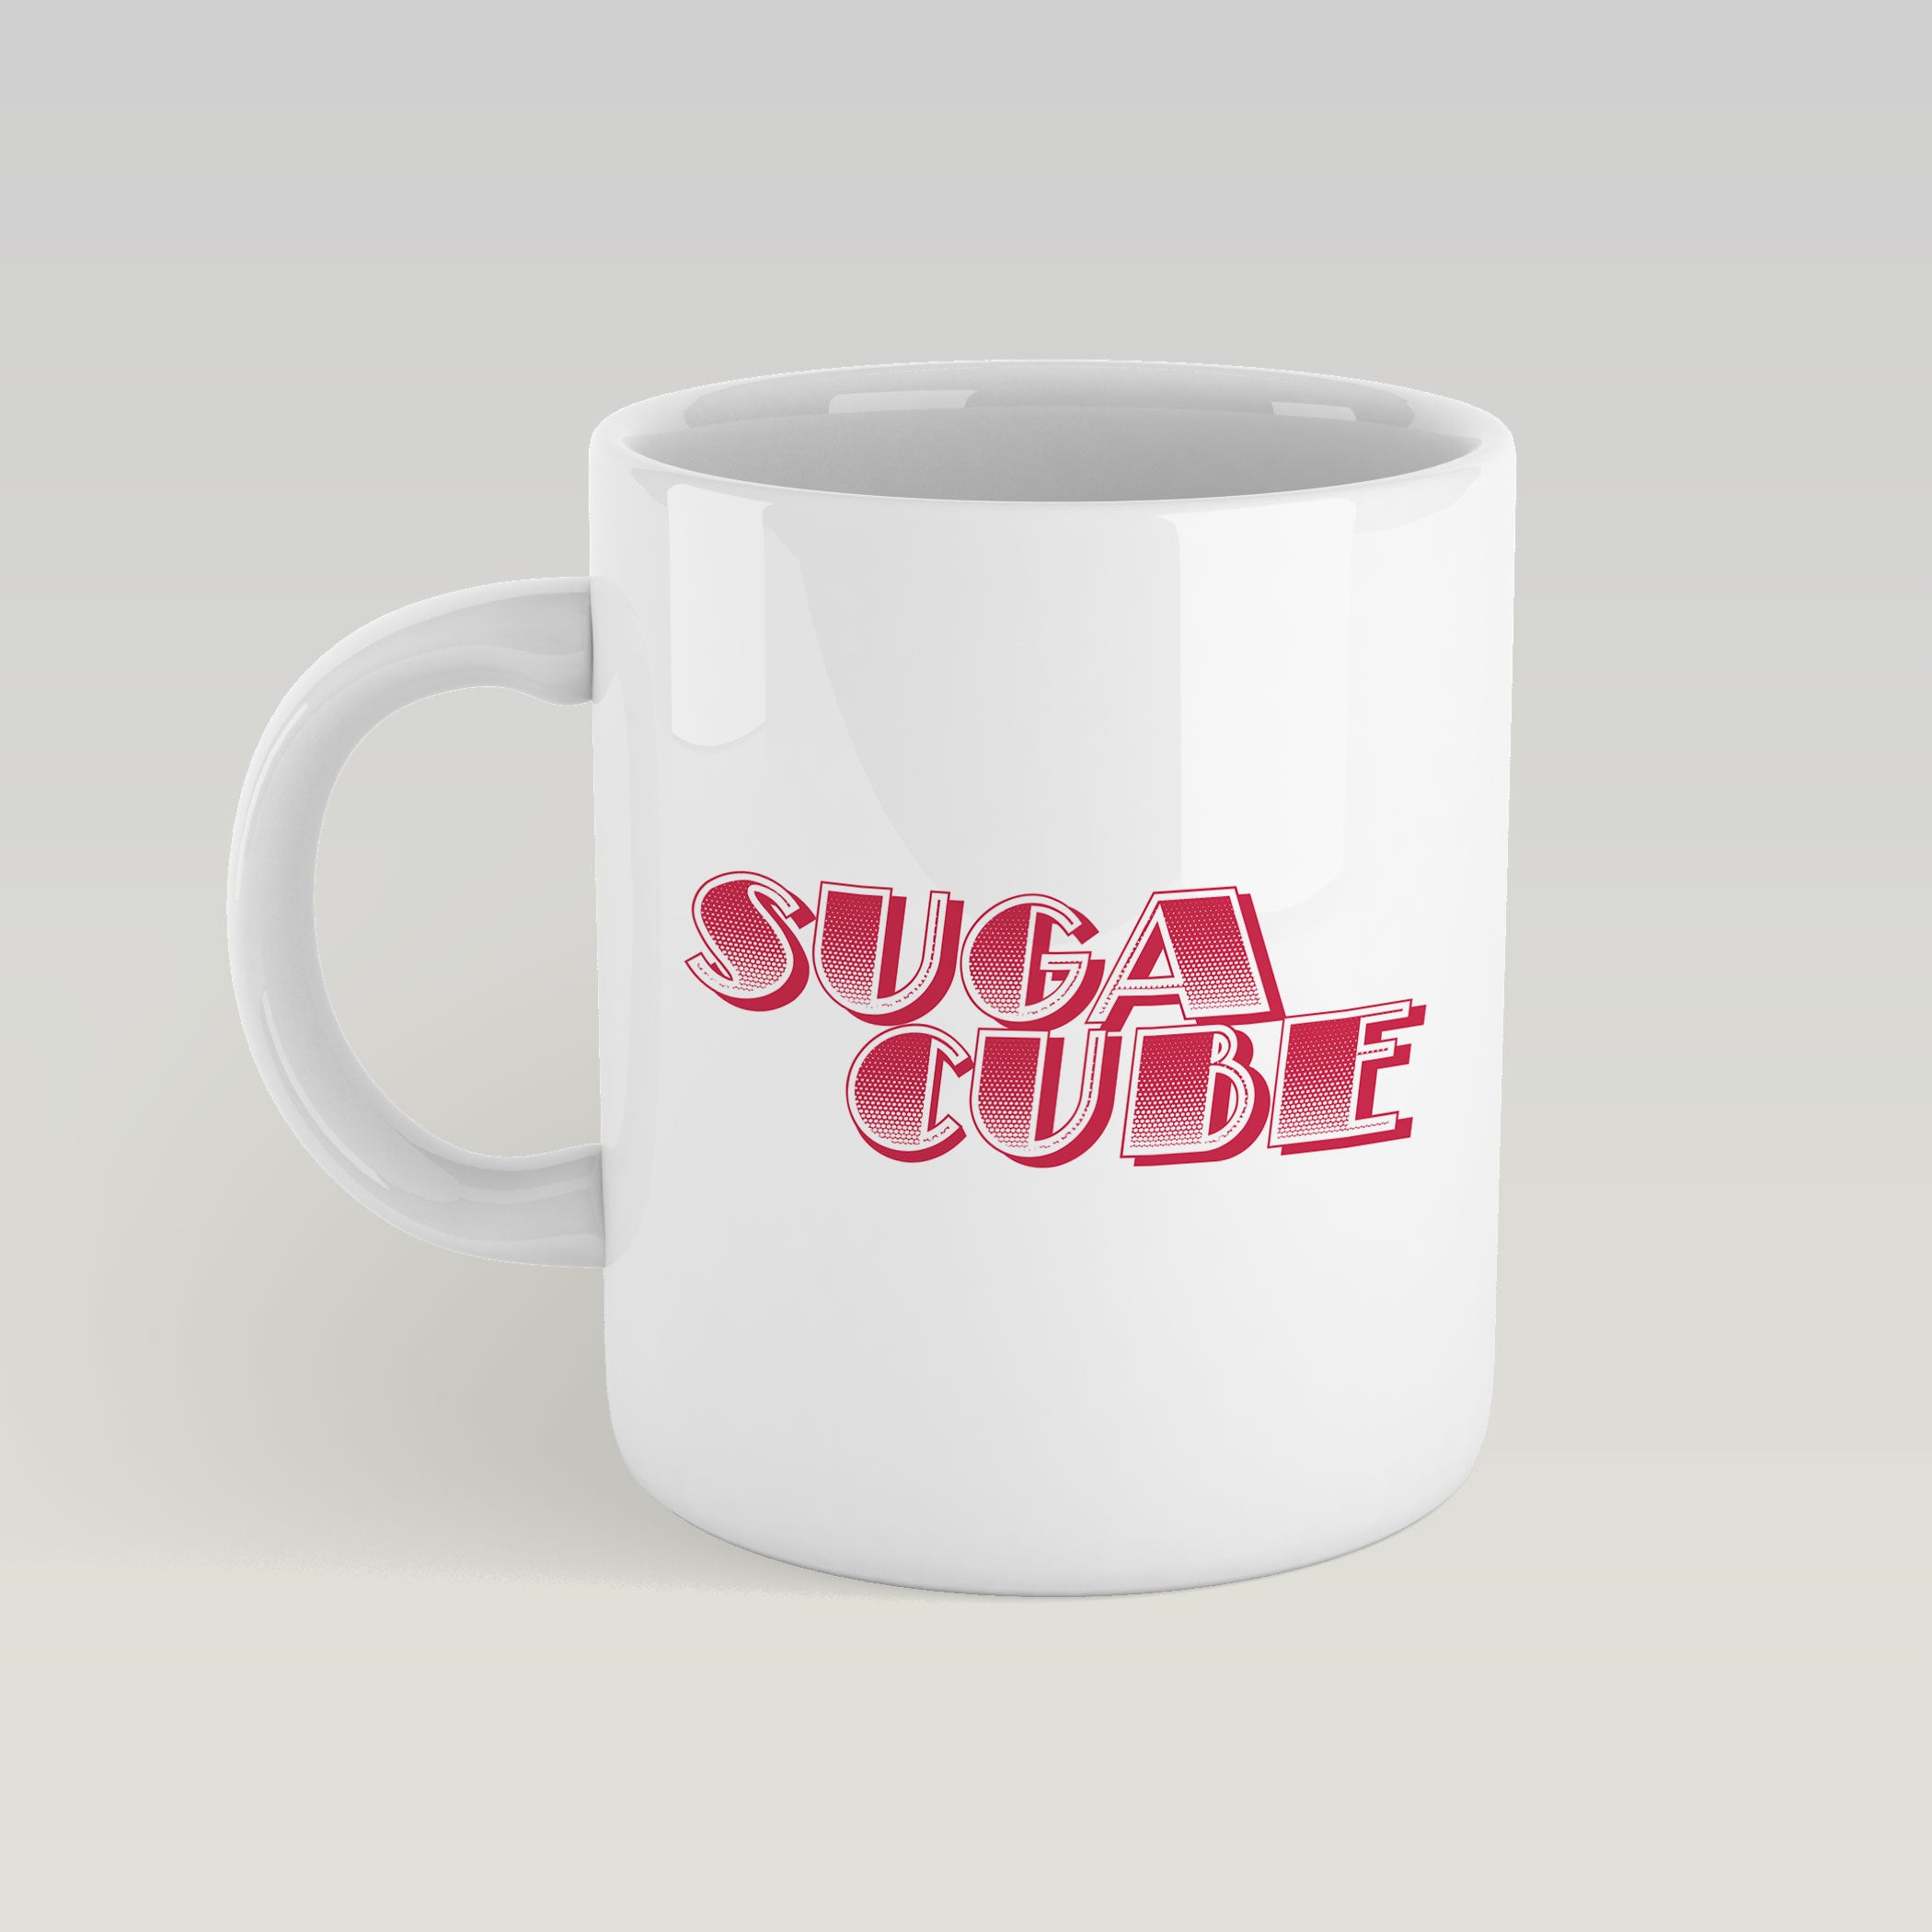 Suga Cube -  Name Mug